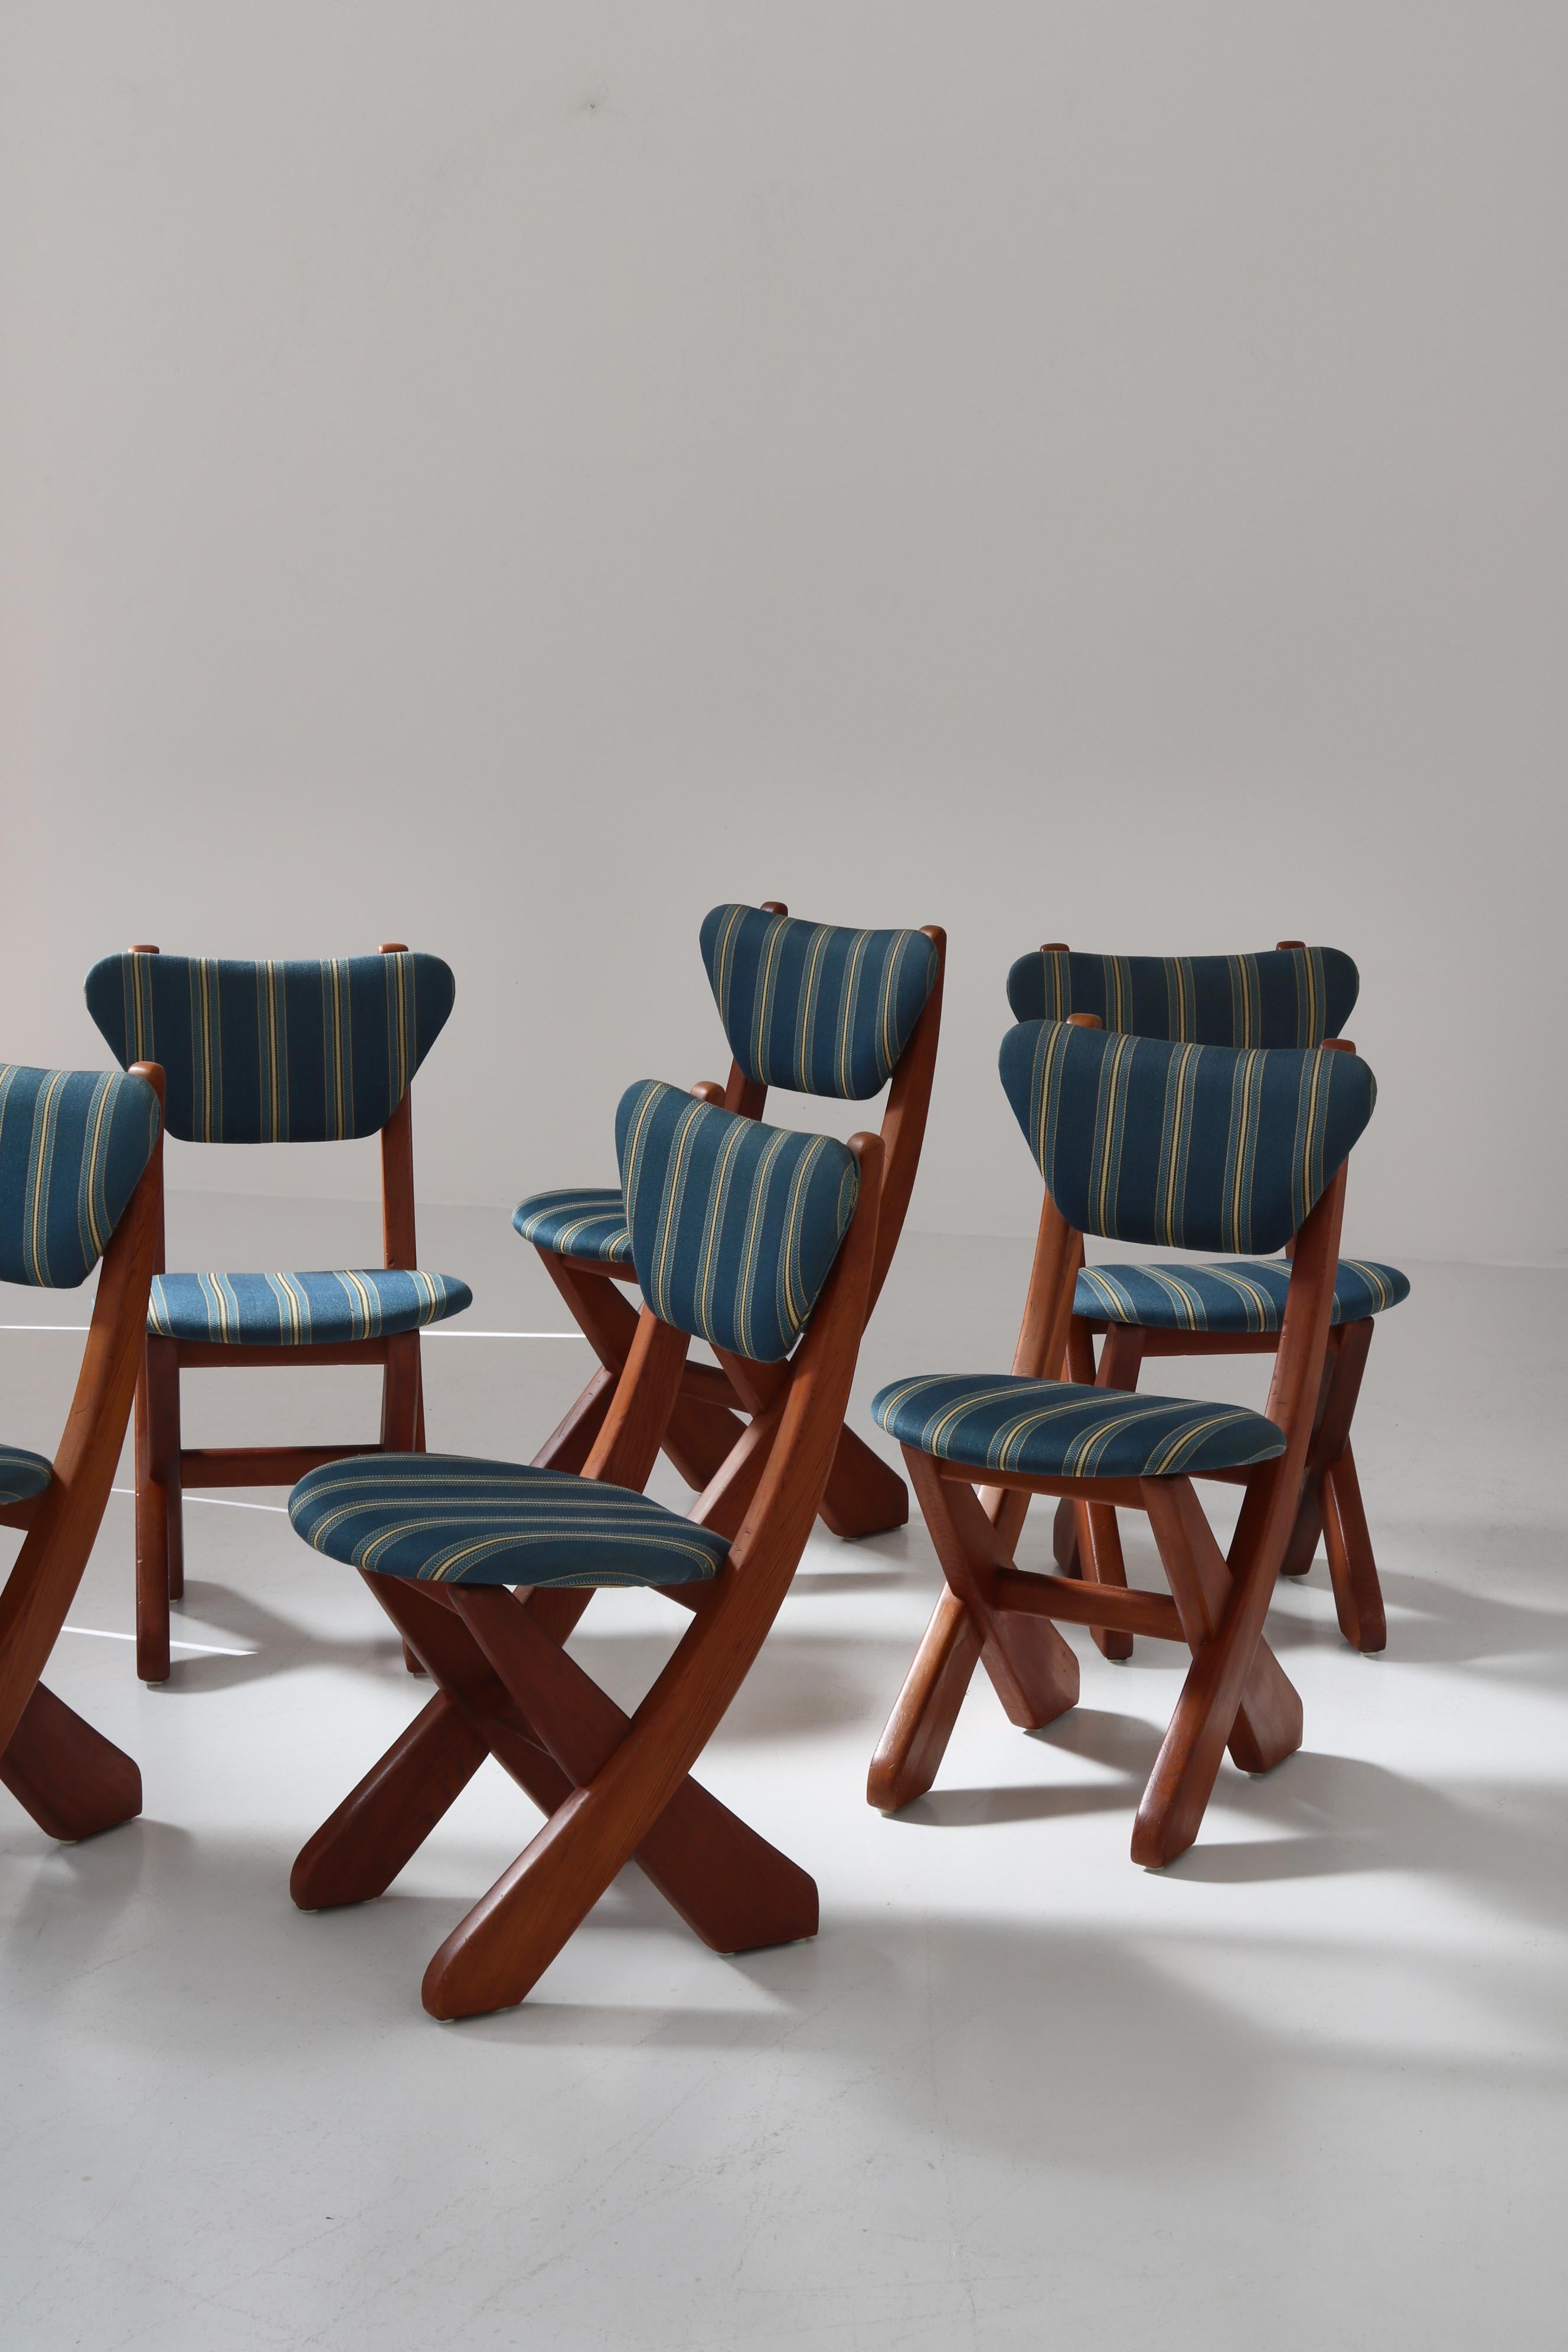 Set of 6 Scandinavian Modern Pinewood Dining Chairs, Denmark, 1960s For Sale 6